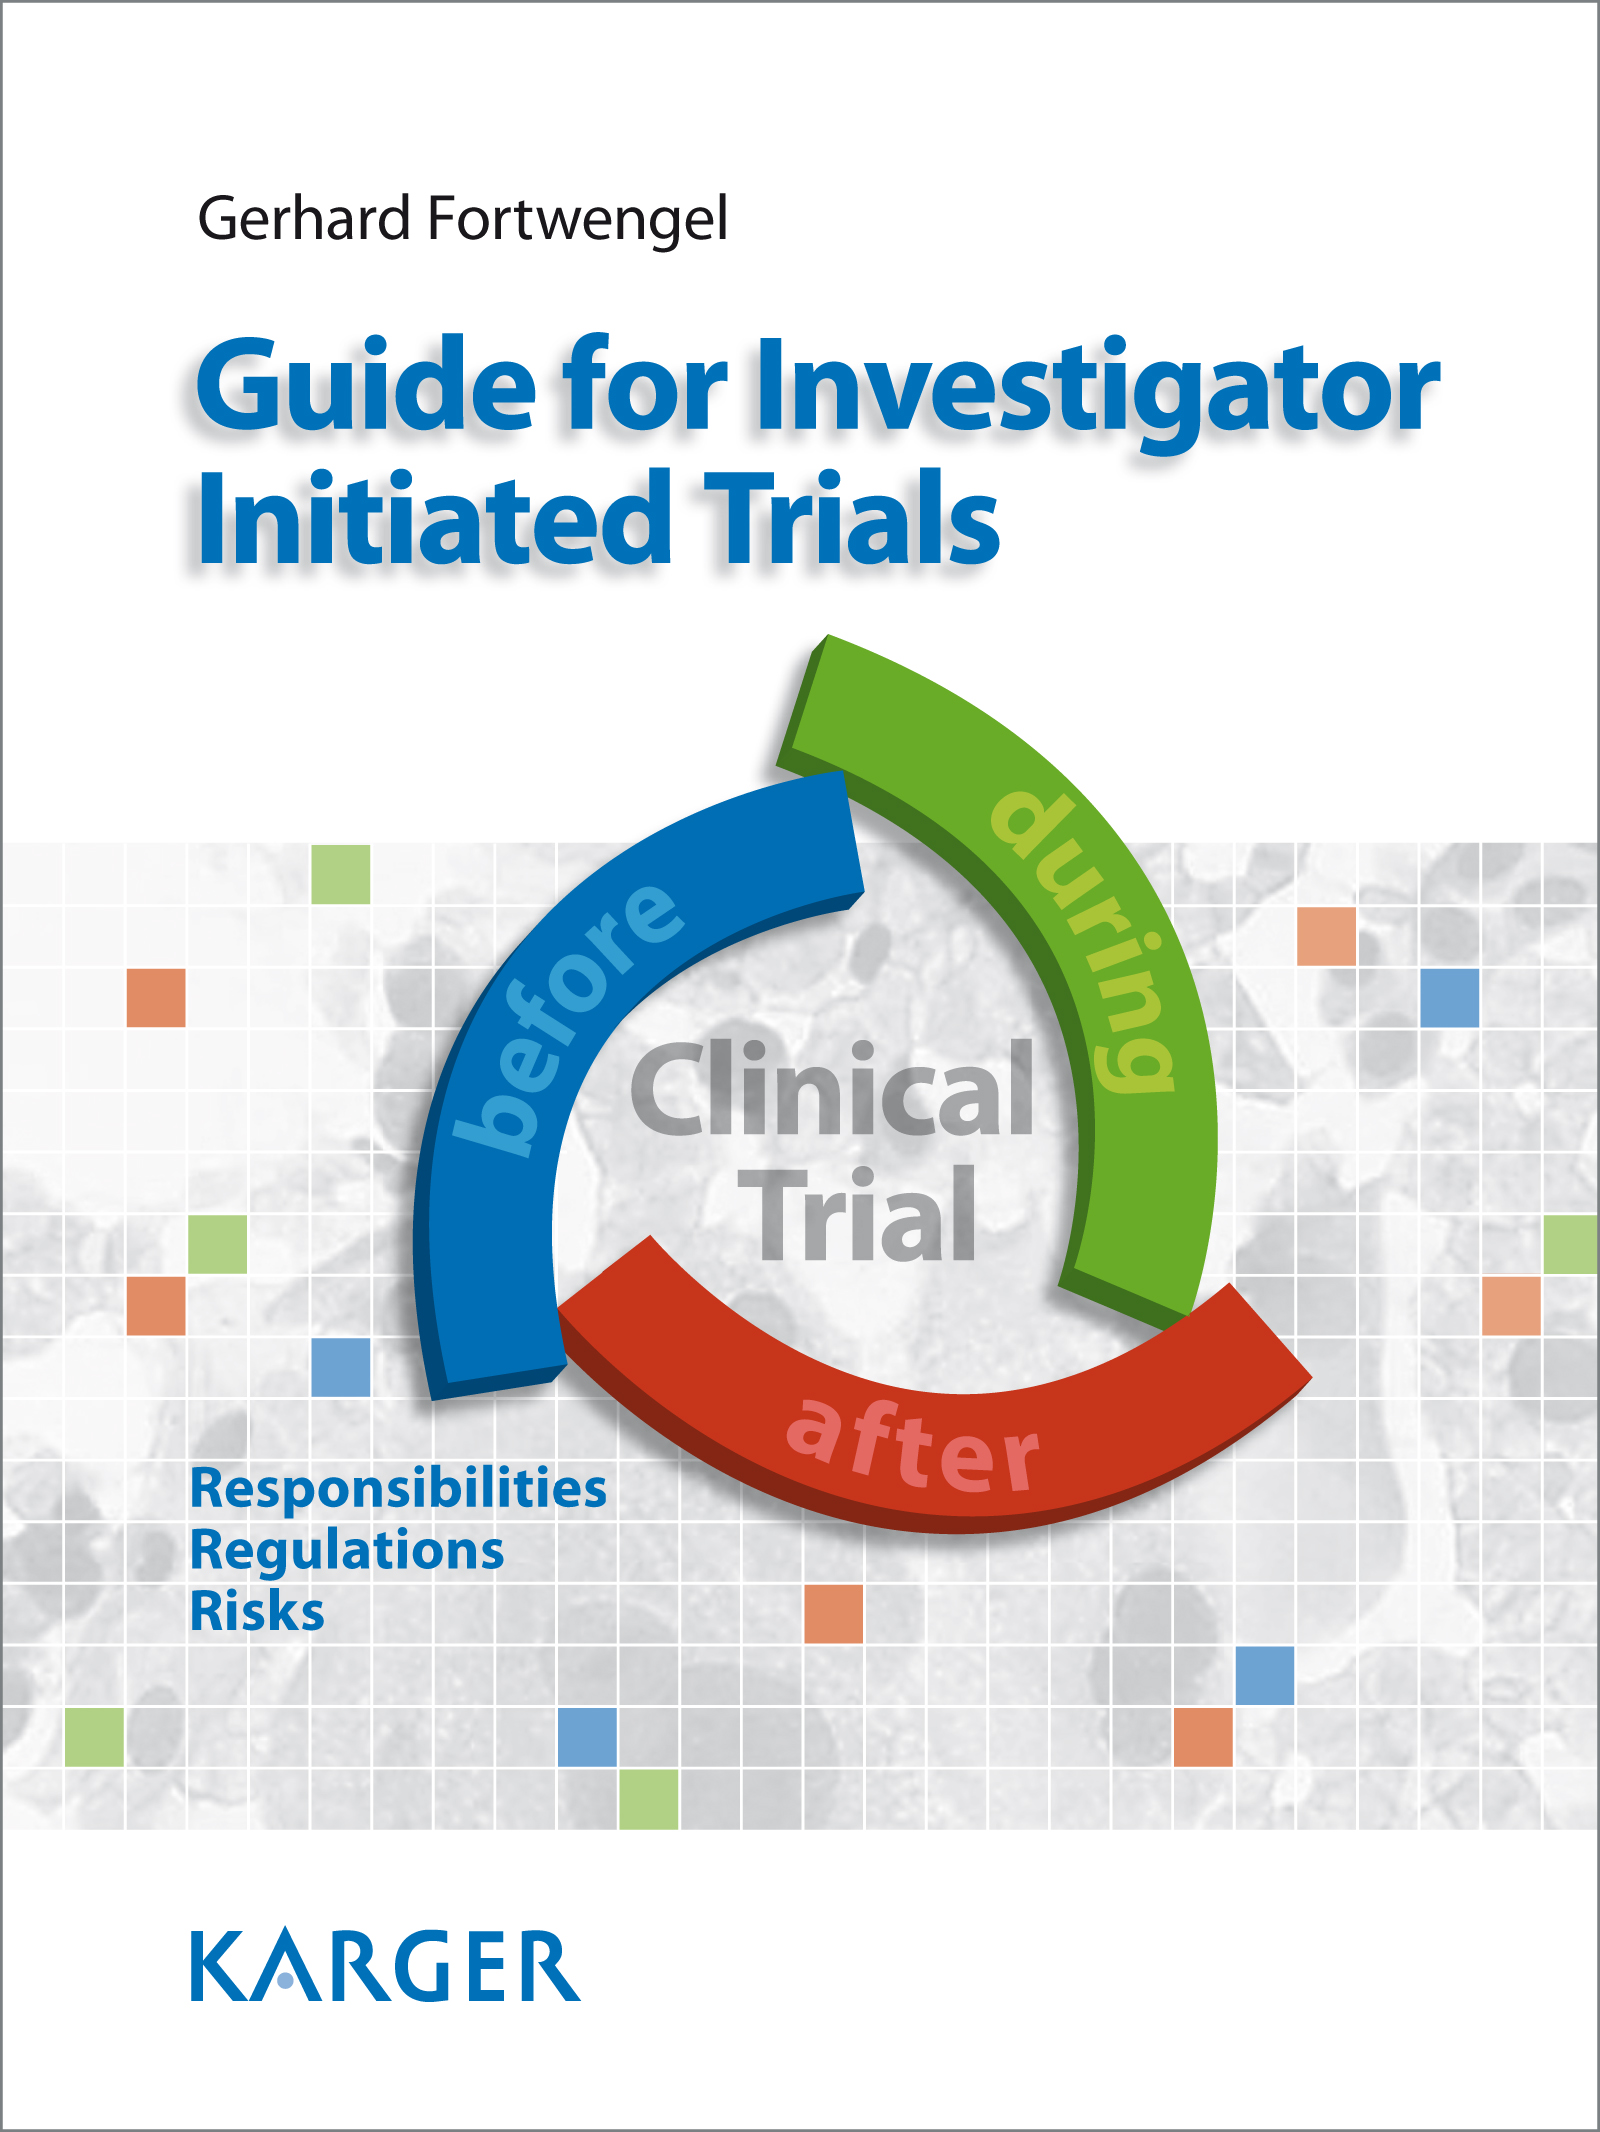 Guide for Investigator Initiated Trials